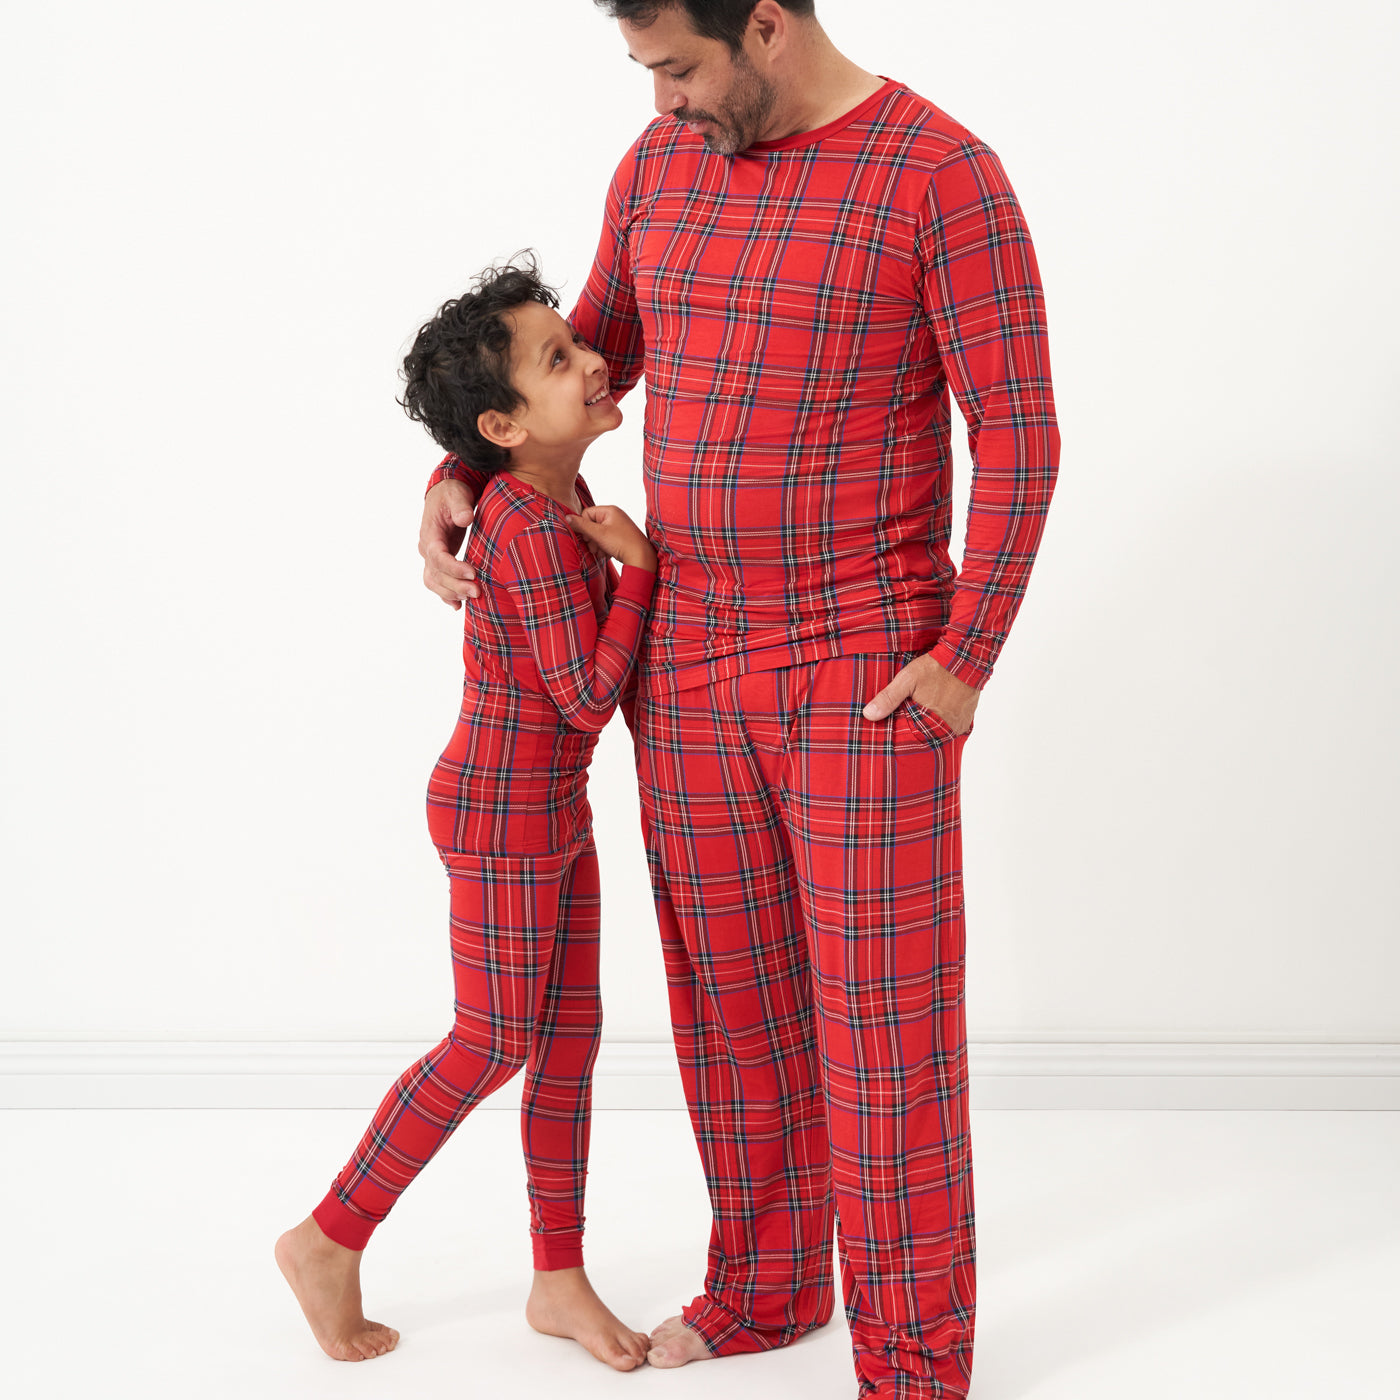 Father and child wearing matching Holiday Plaid pajamas